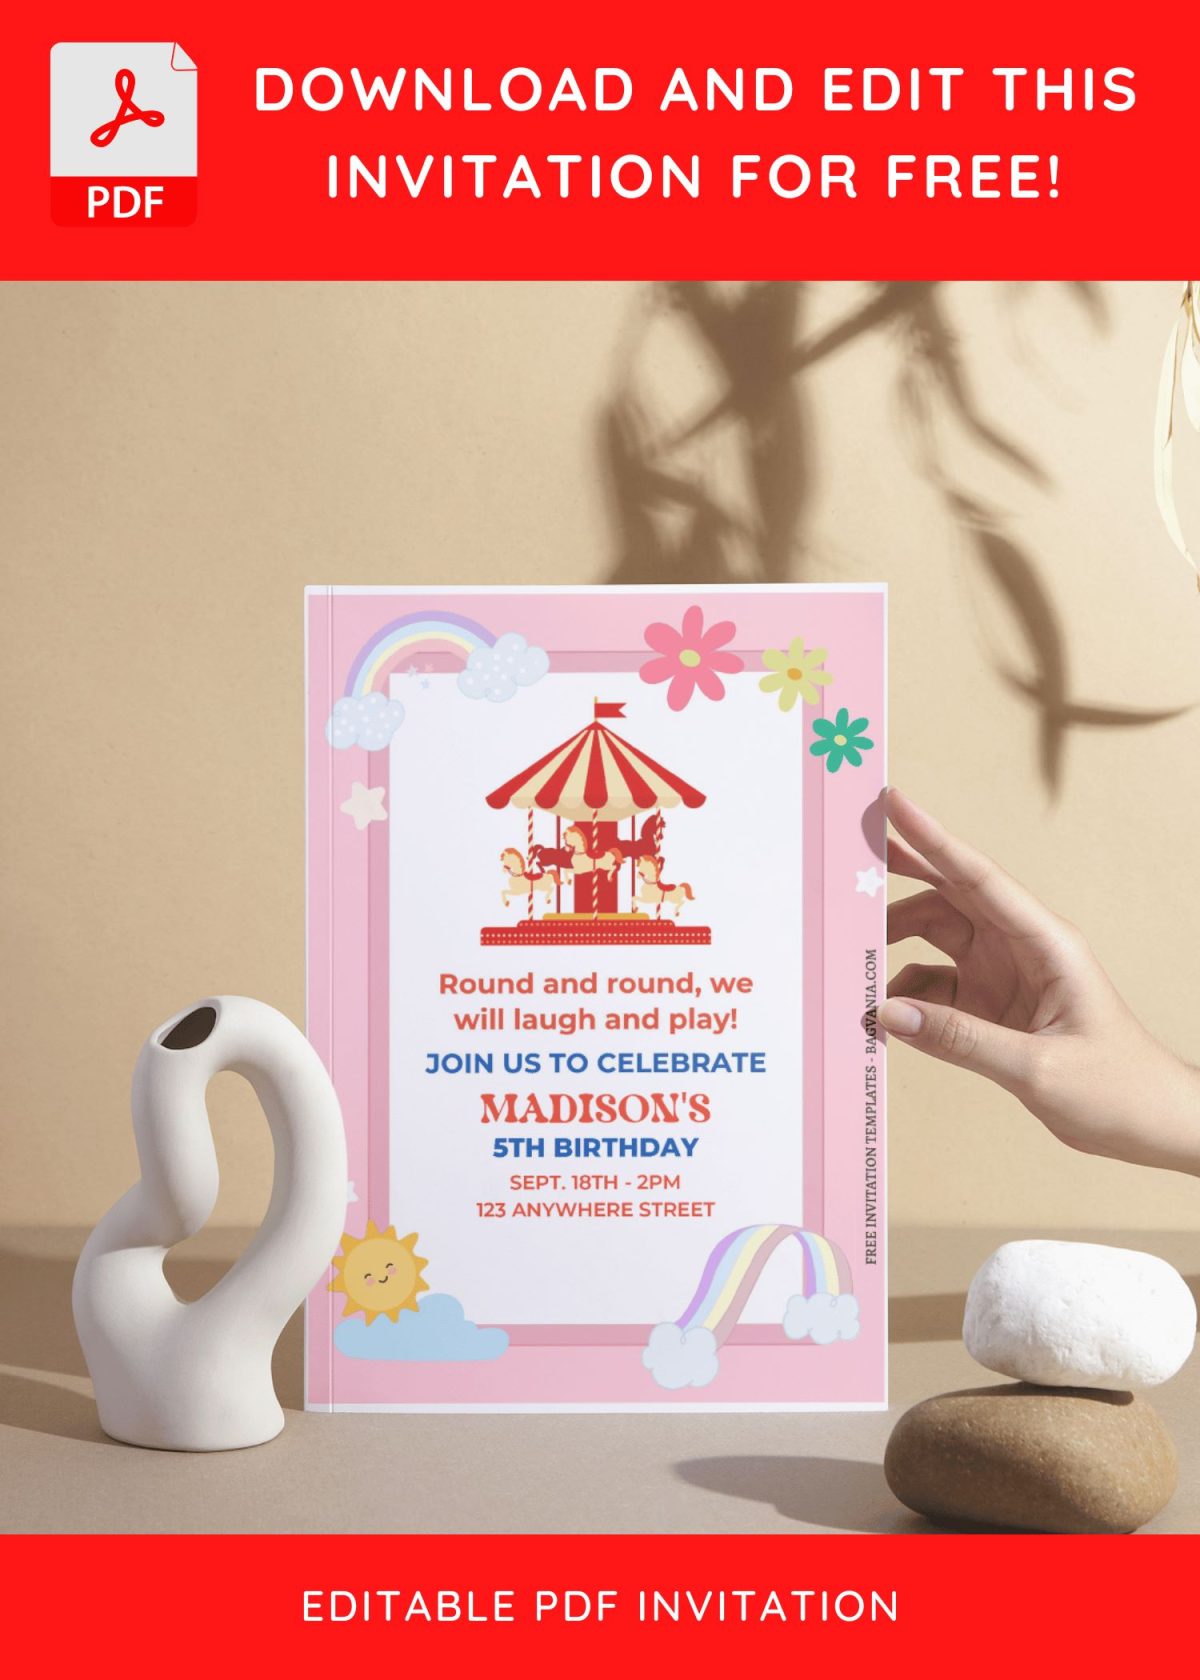 (Free Editable PDF) Cute Merry Go Round Birthday Invitation Templates I